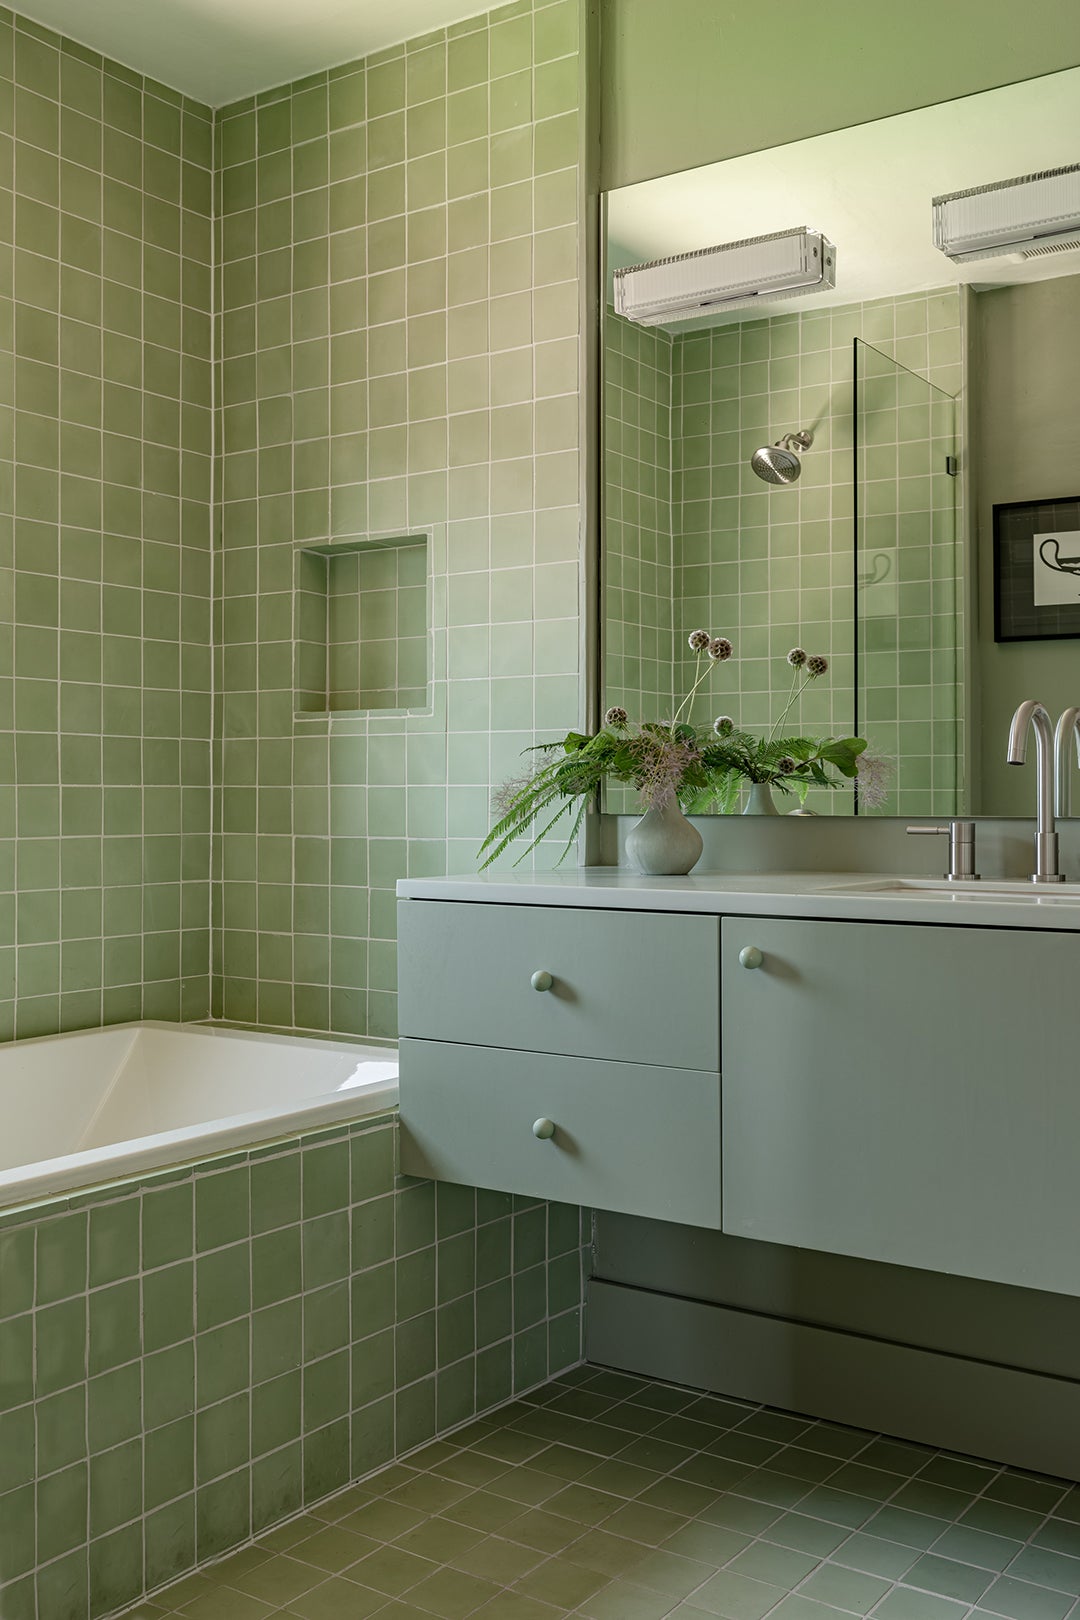 Sage green bathroom tiles